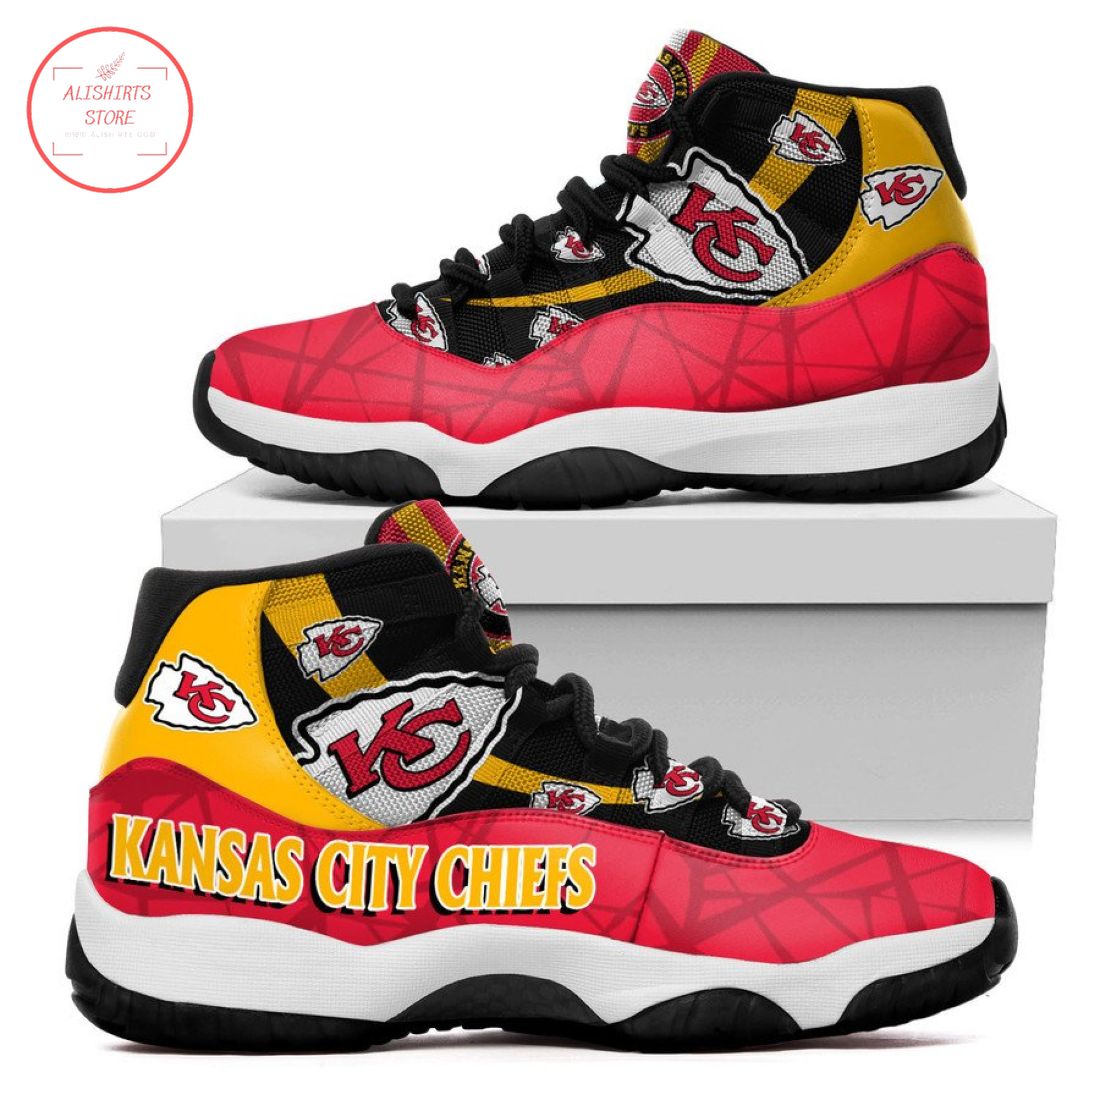 NFL Kansas City Chiefs New Air Jordan 11 Sneakers Shoes